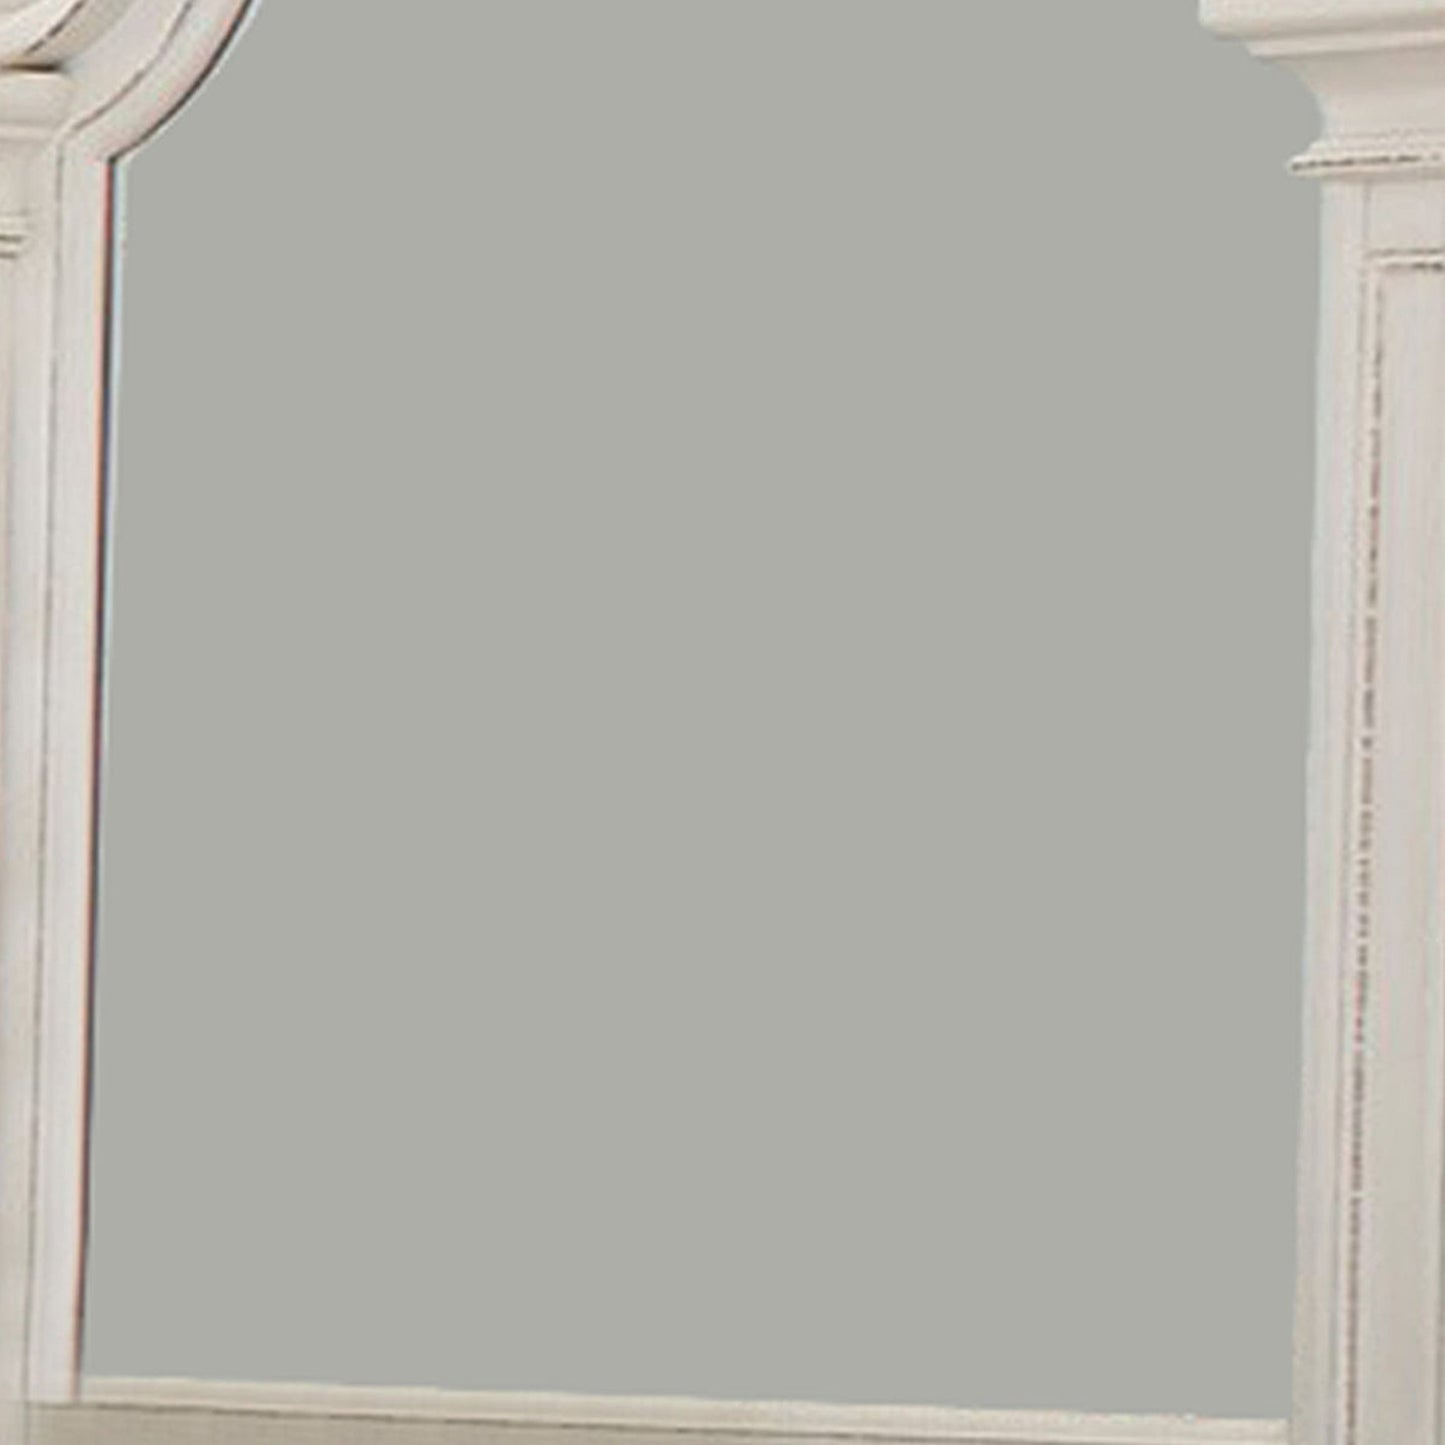 Benzara White Scalloped Design Wooden Frame Mirror With Distressed Detail